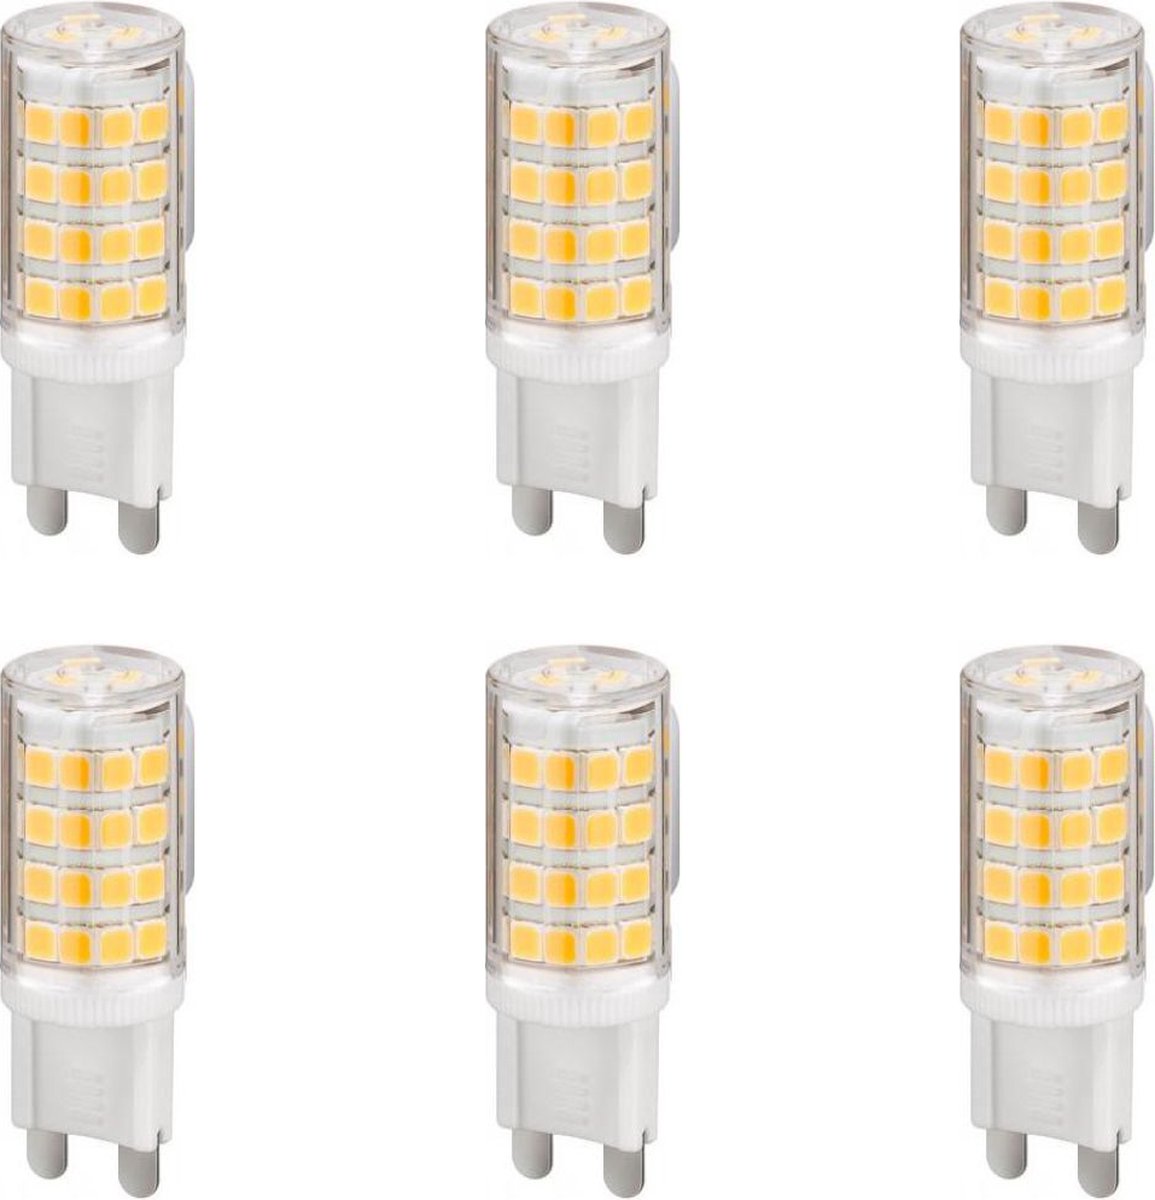 G9 Led Lampen (6 stuks) - 2200 Kelvin (extra warm wit) - 3W - Dimbaar - 1.7 x 1.7 x 6.4 cm (lxbxh) - Hallogeen 28 W -